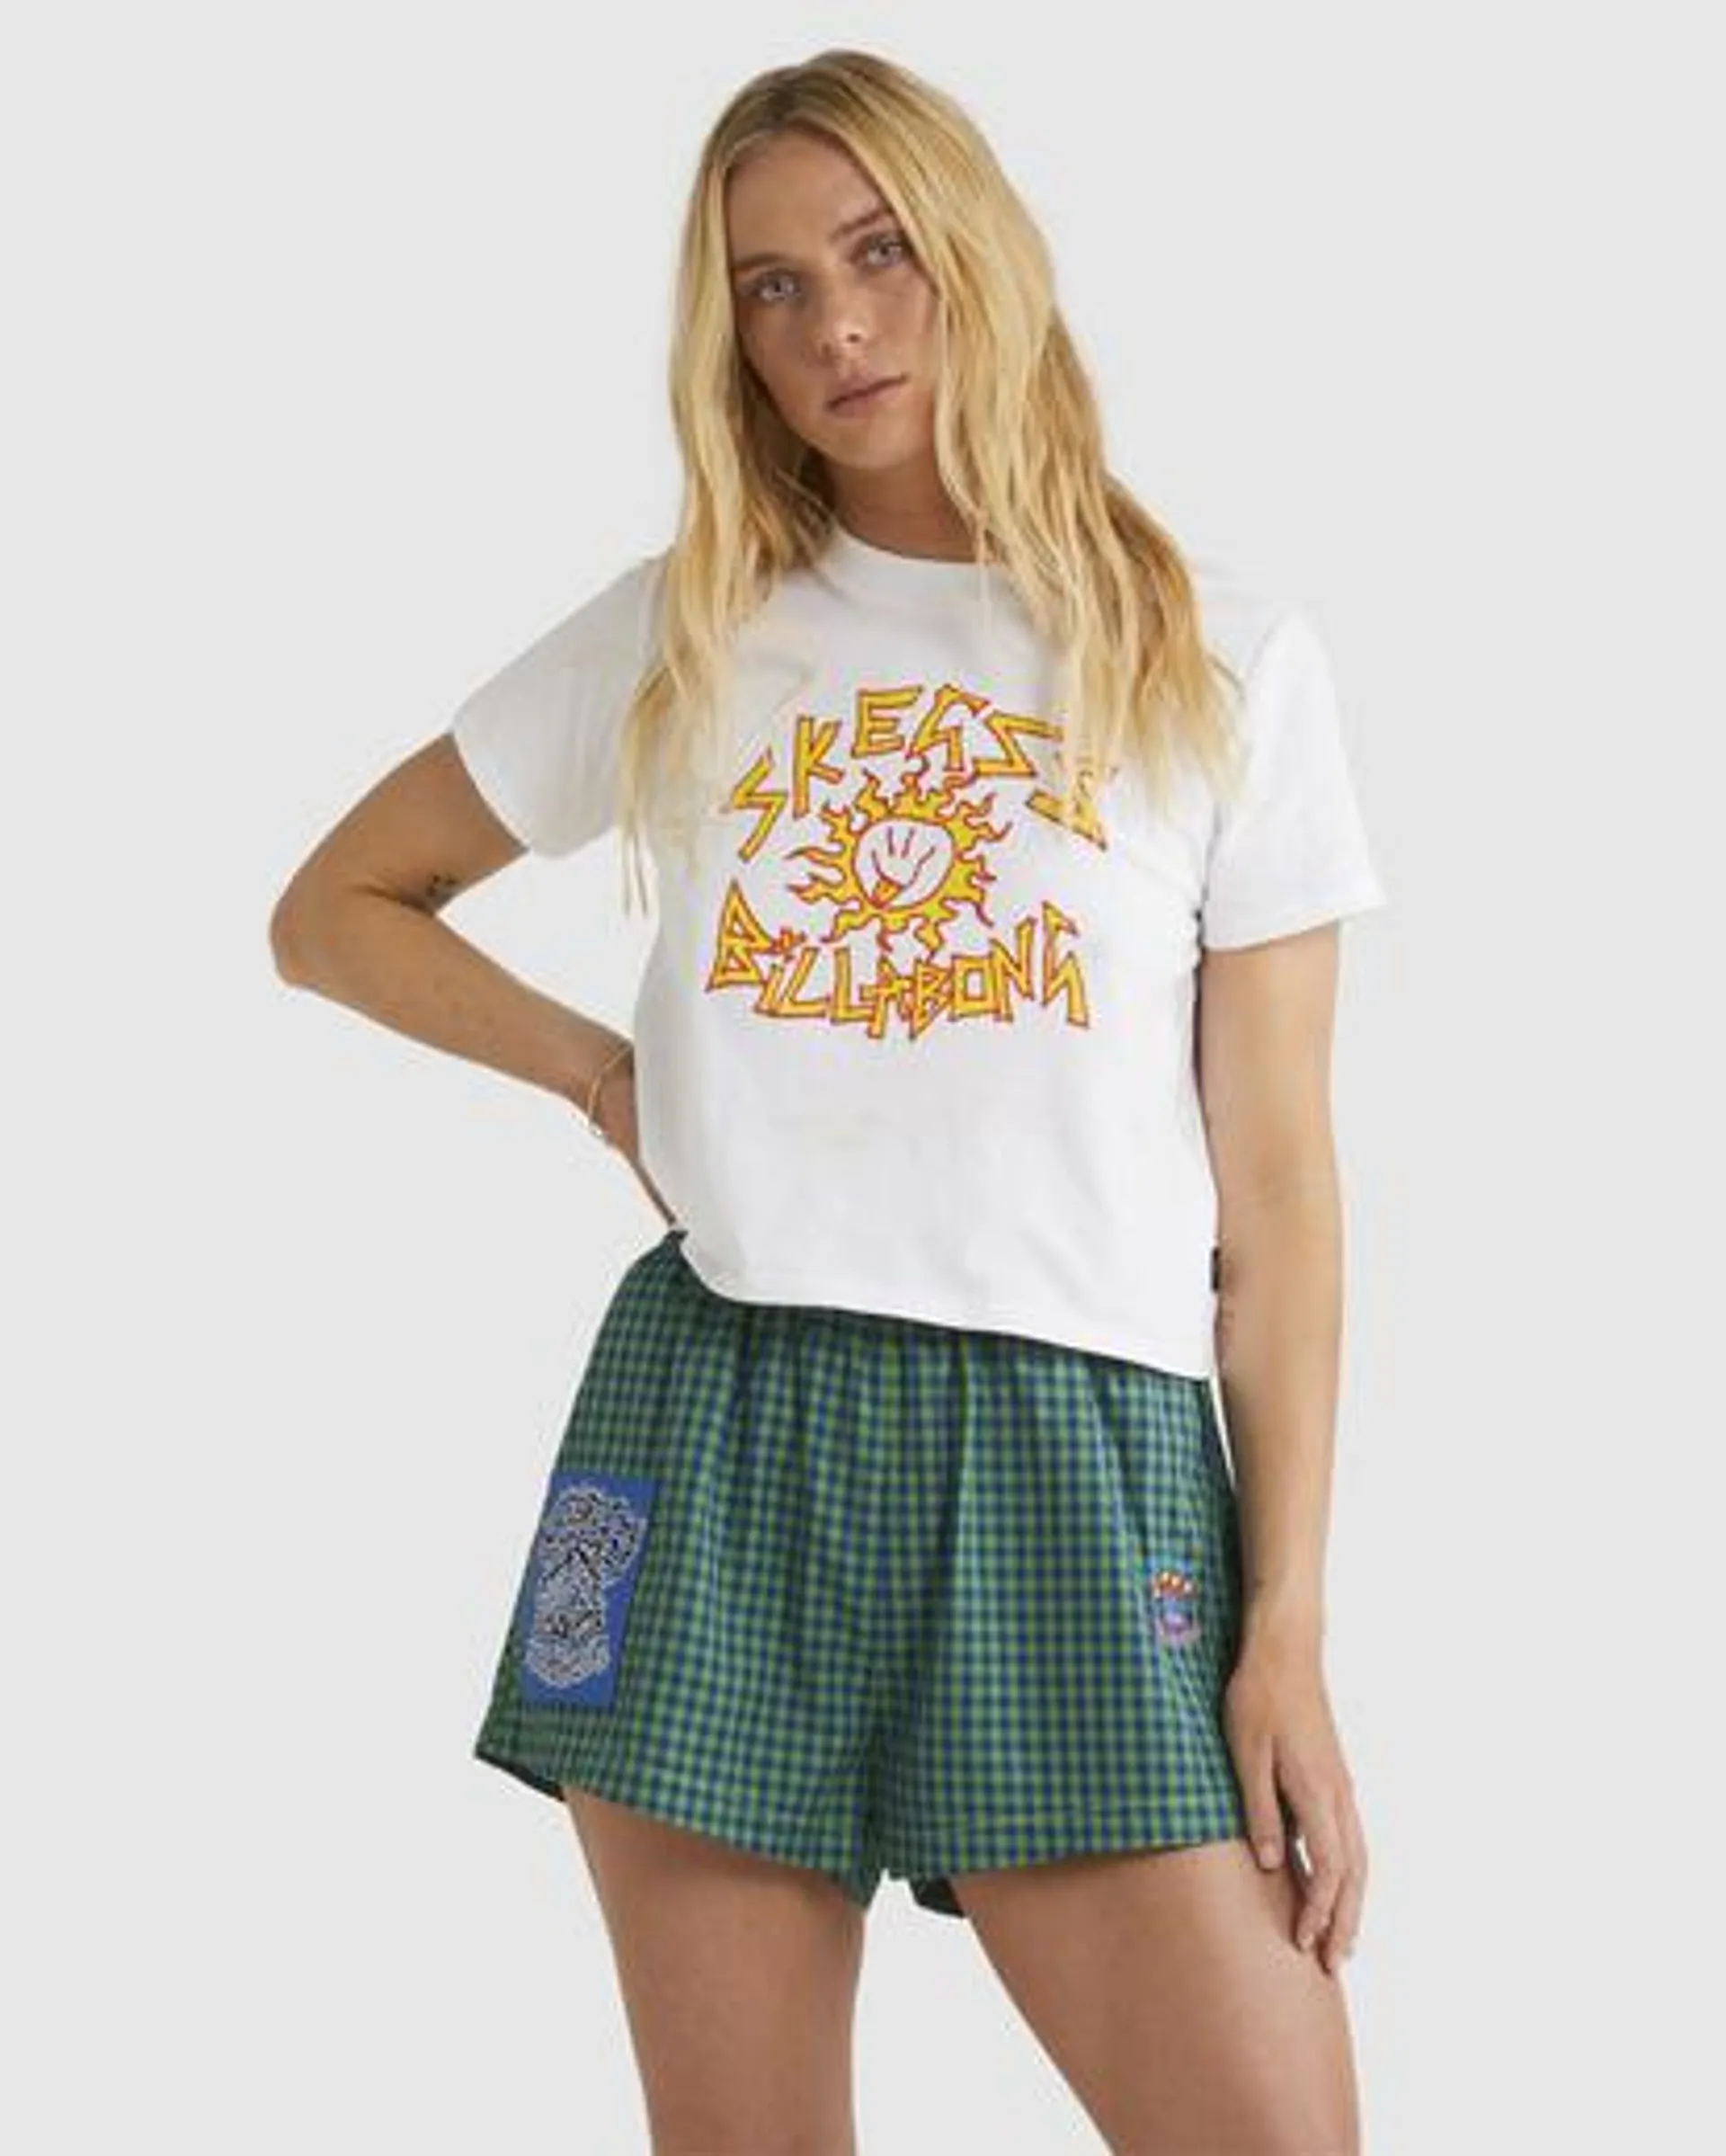 Skegss Sunart - Camiseta de Corte Masculino para Mujer